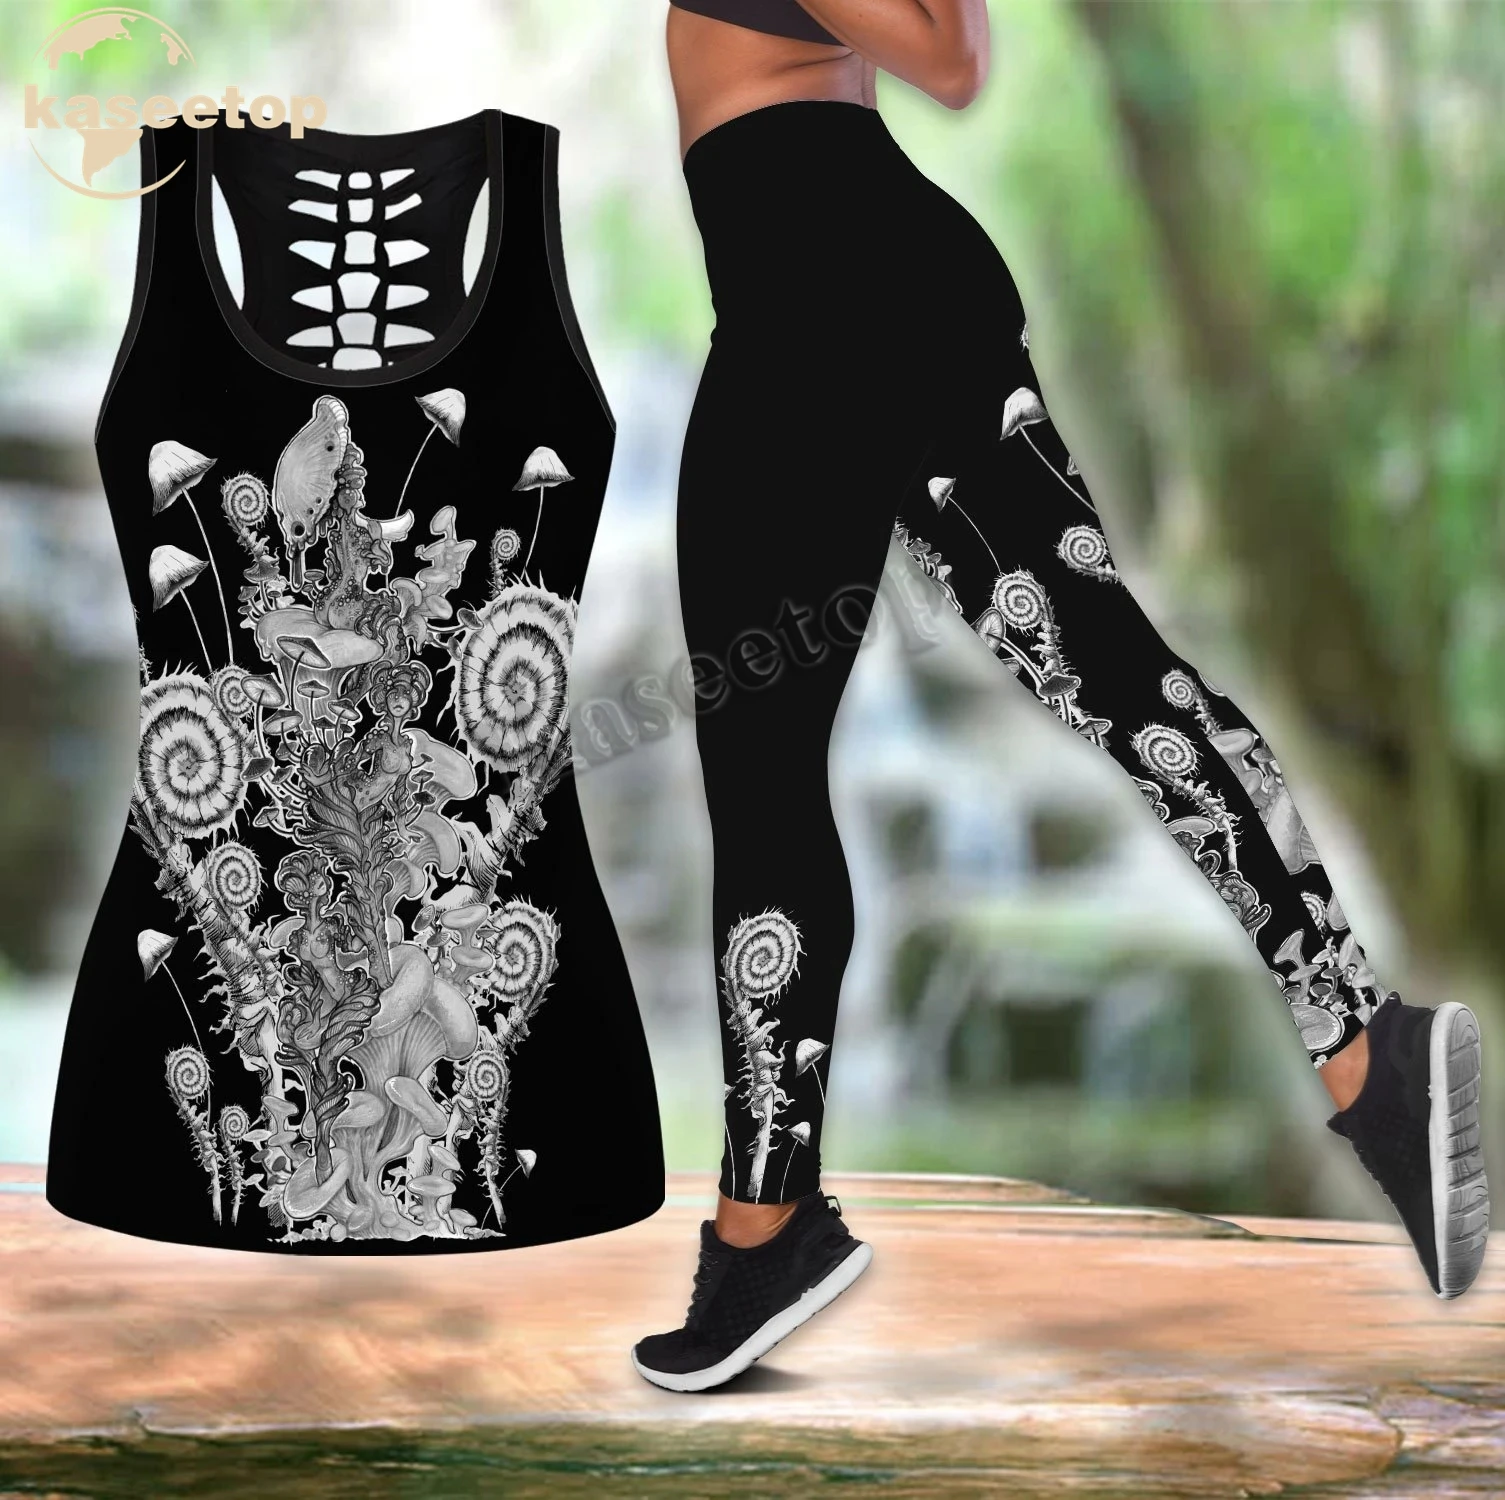 

Kaseetop Mushroom Fairy Combo Two Piece Yoga Set Women 3D Print Vest Hollow Out Hollow Tank & Legging Outfit Summer Casual LK74